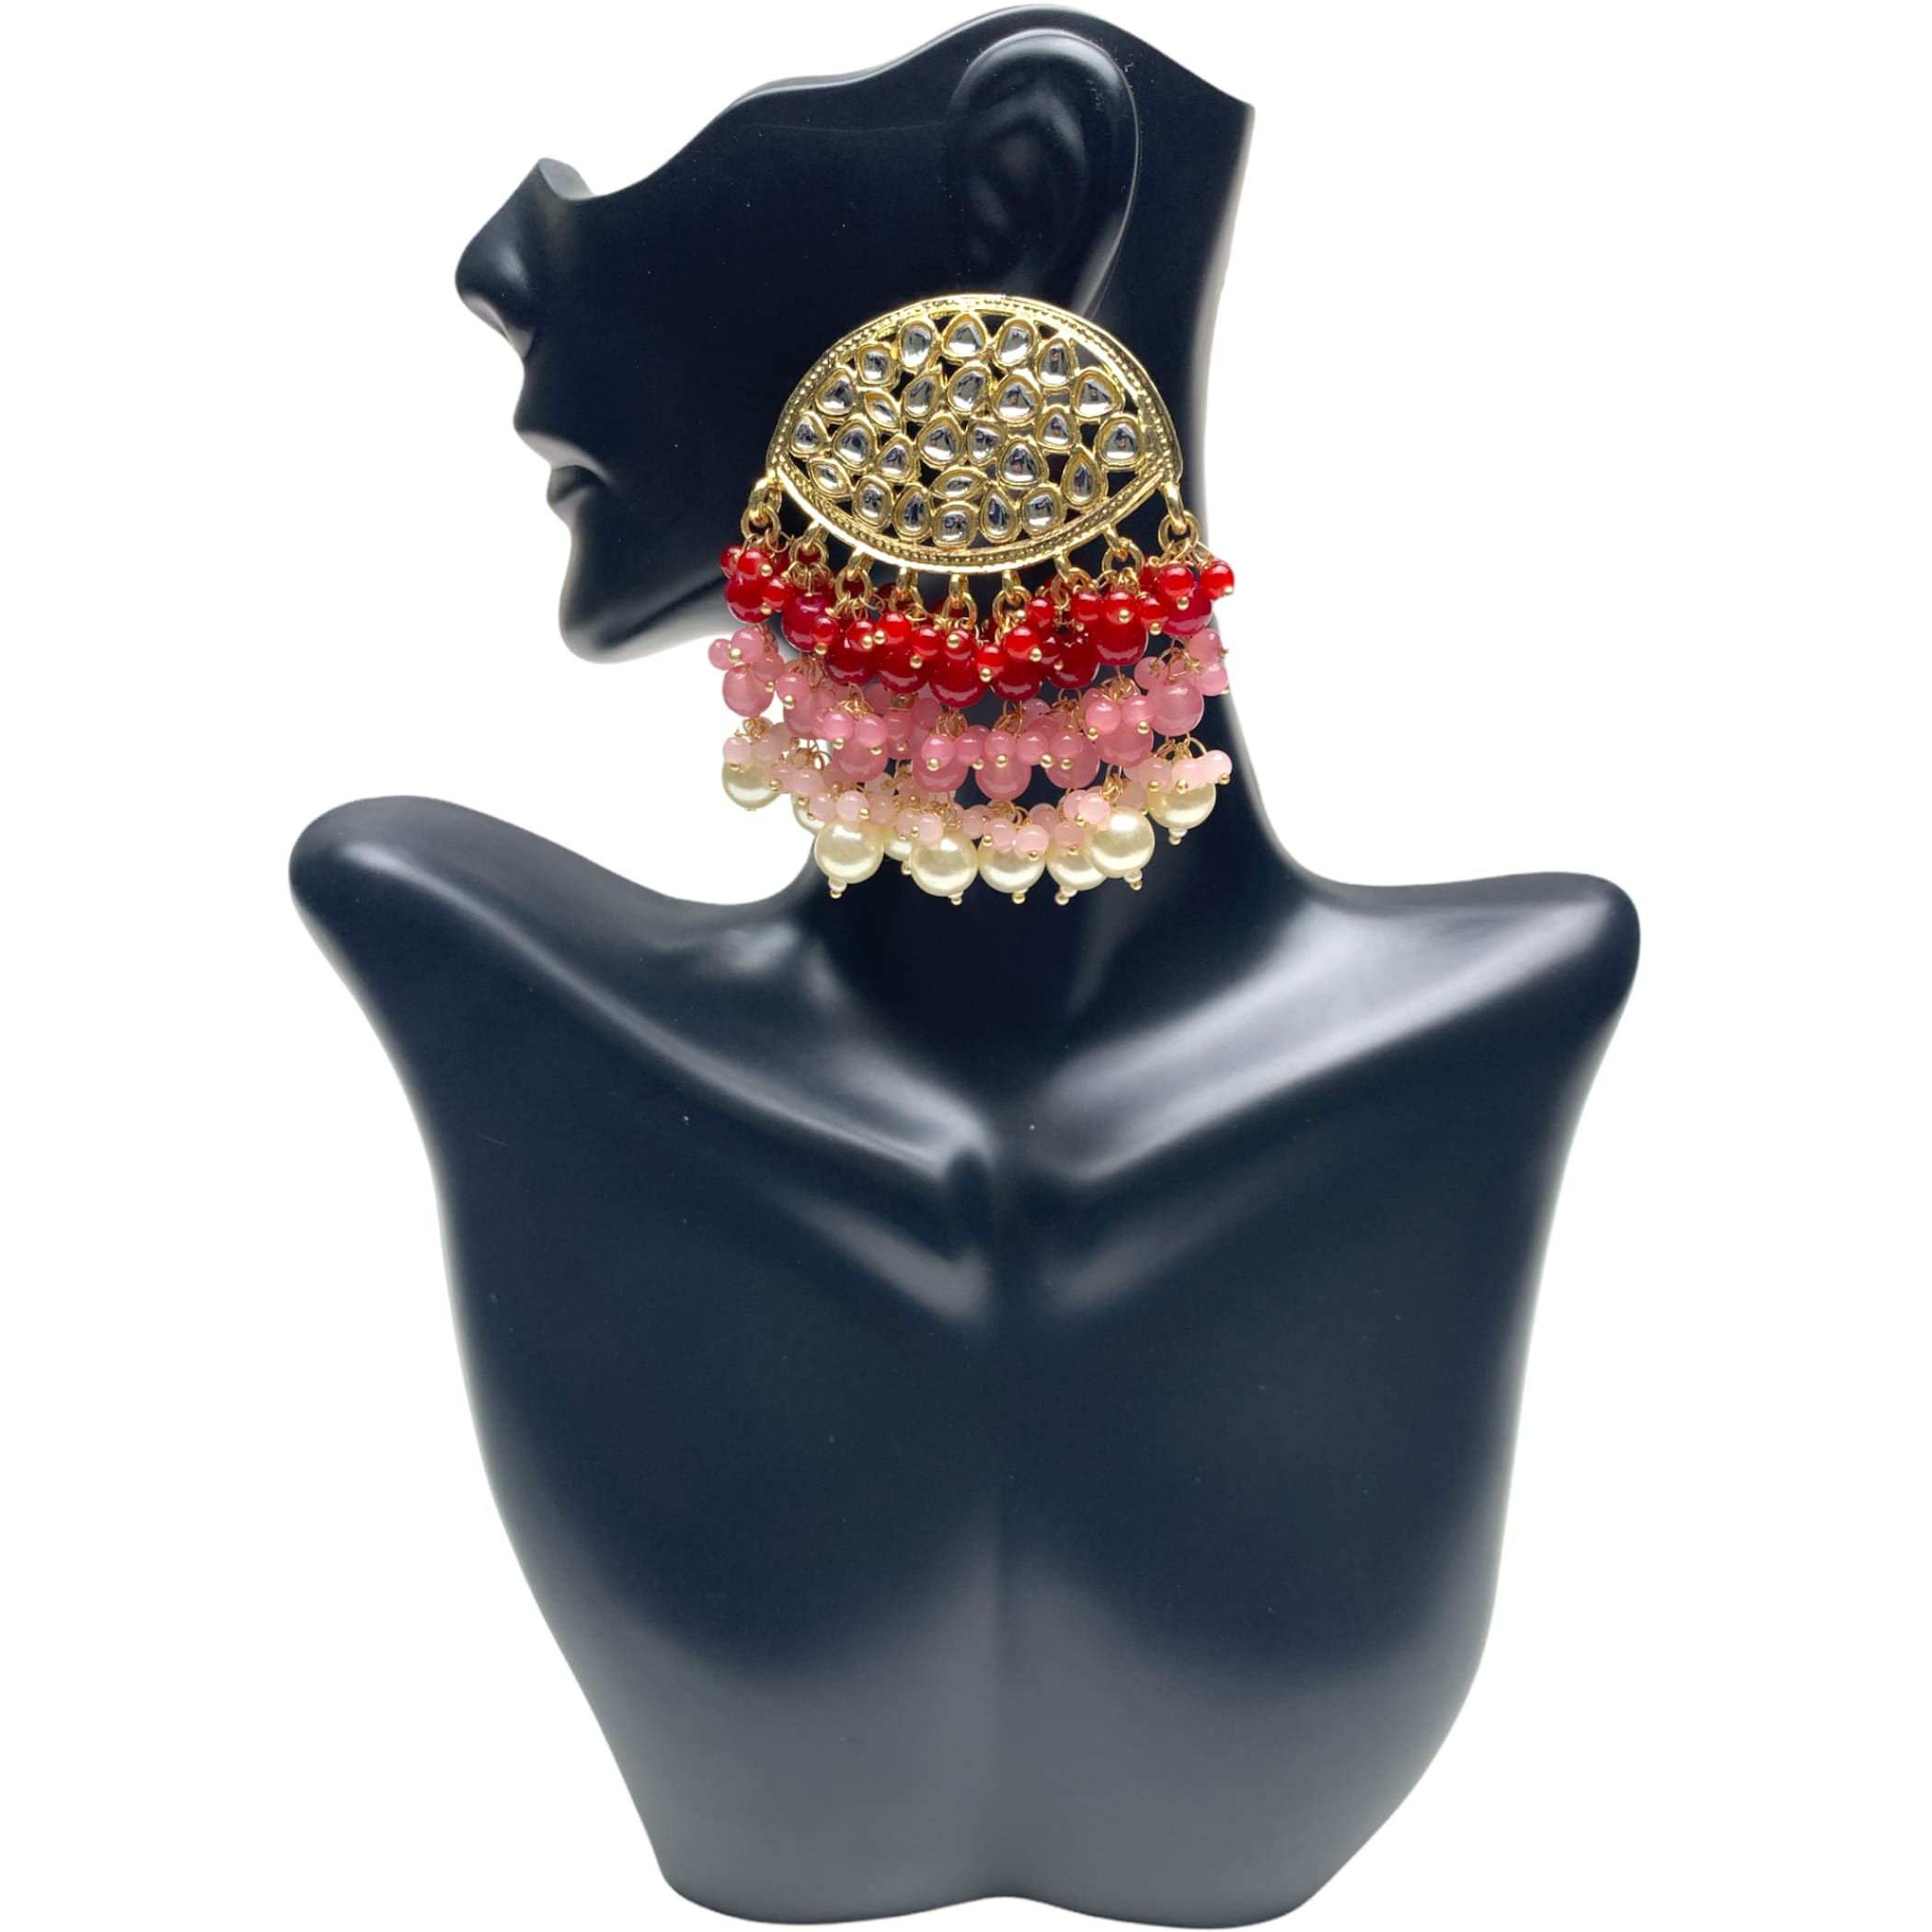 Indian earrings bollywood jhumka for women jhumkas